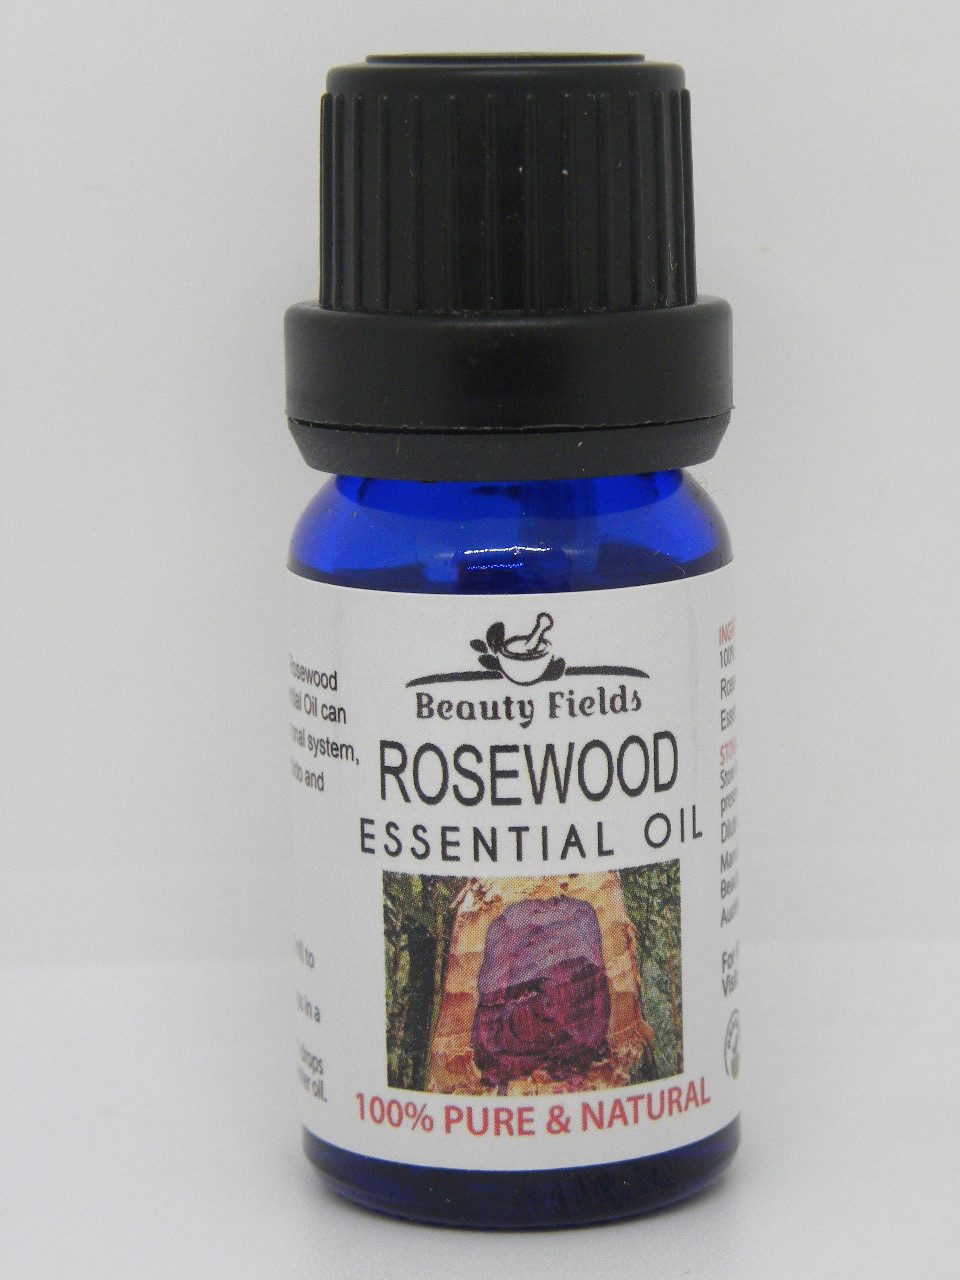 Rosewood essential oil 1